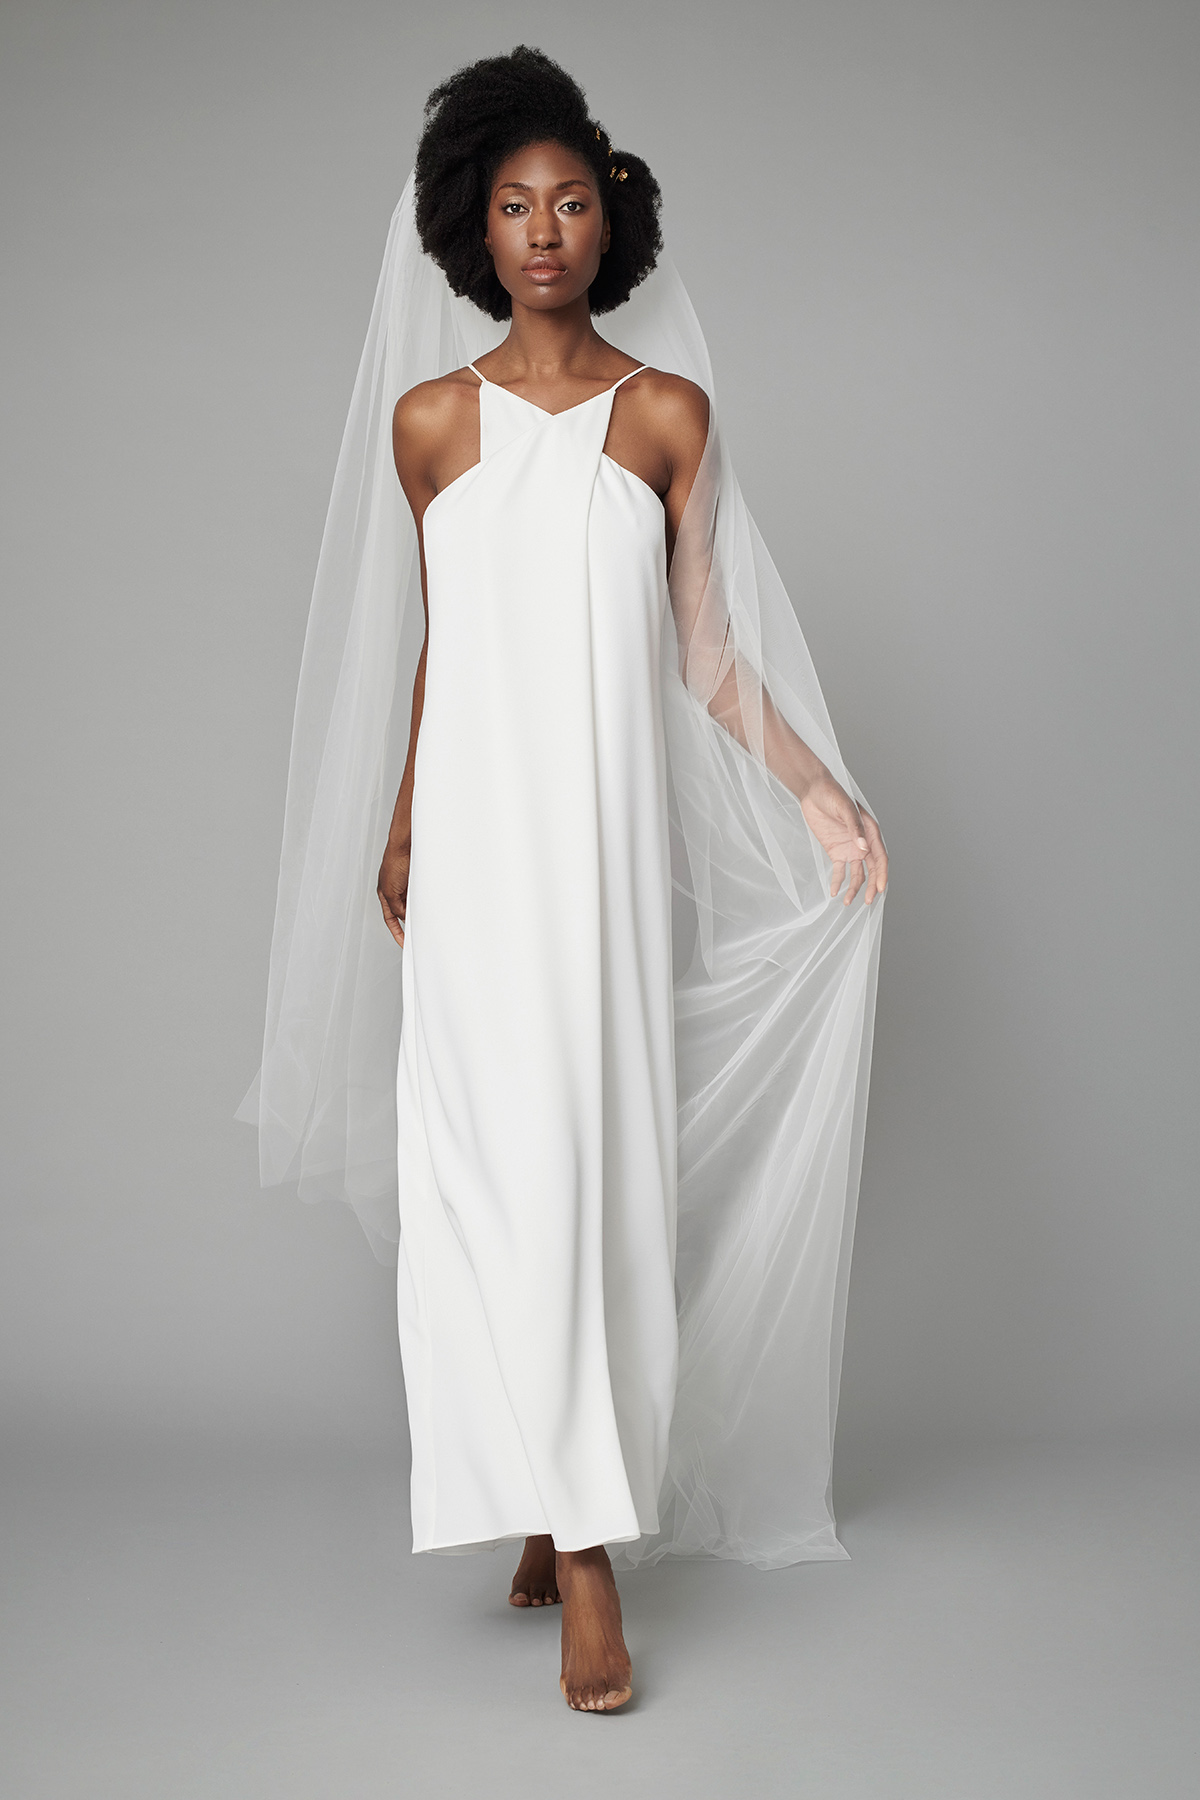 Black model in Rita Colson wedding dress